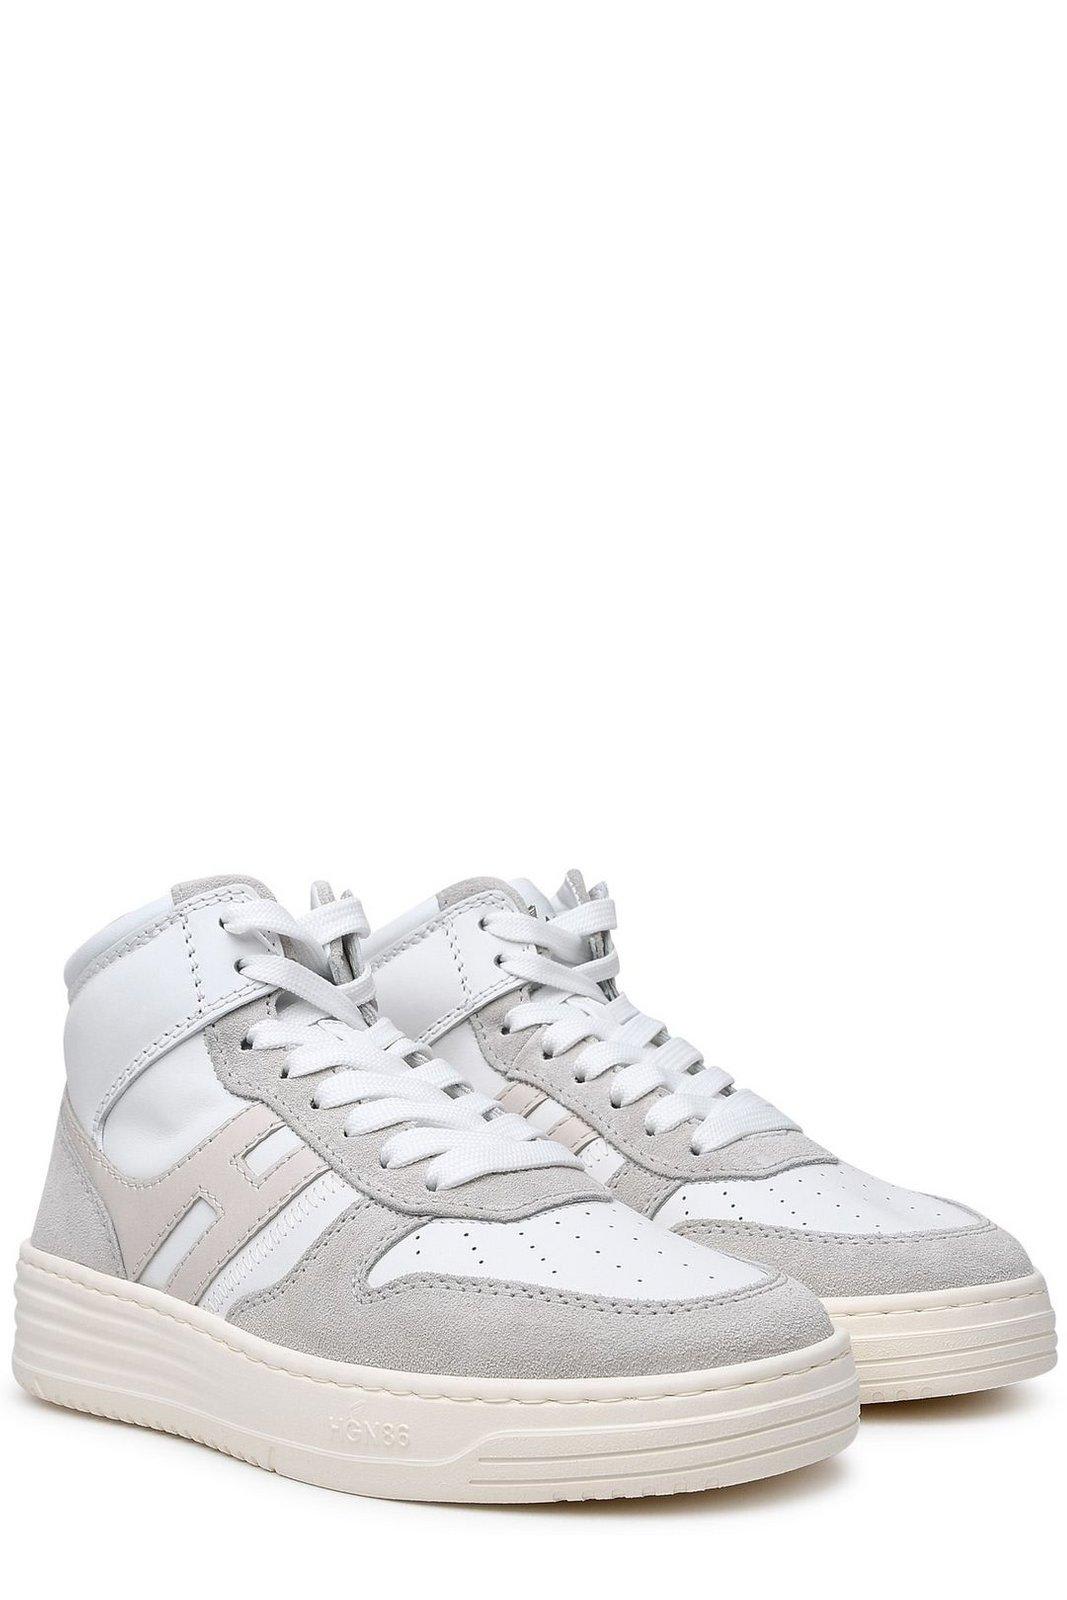 Shop Hogan H630 Basket Sneakers In White